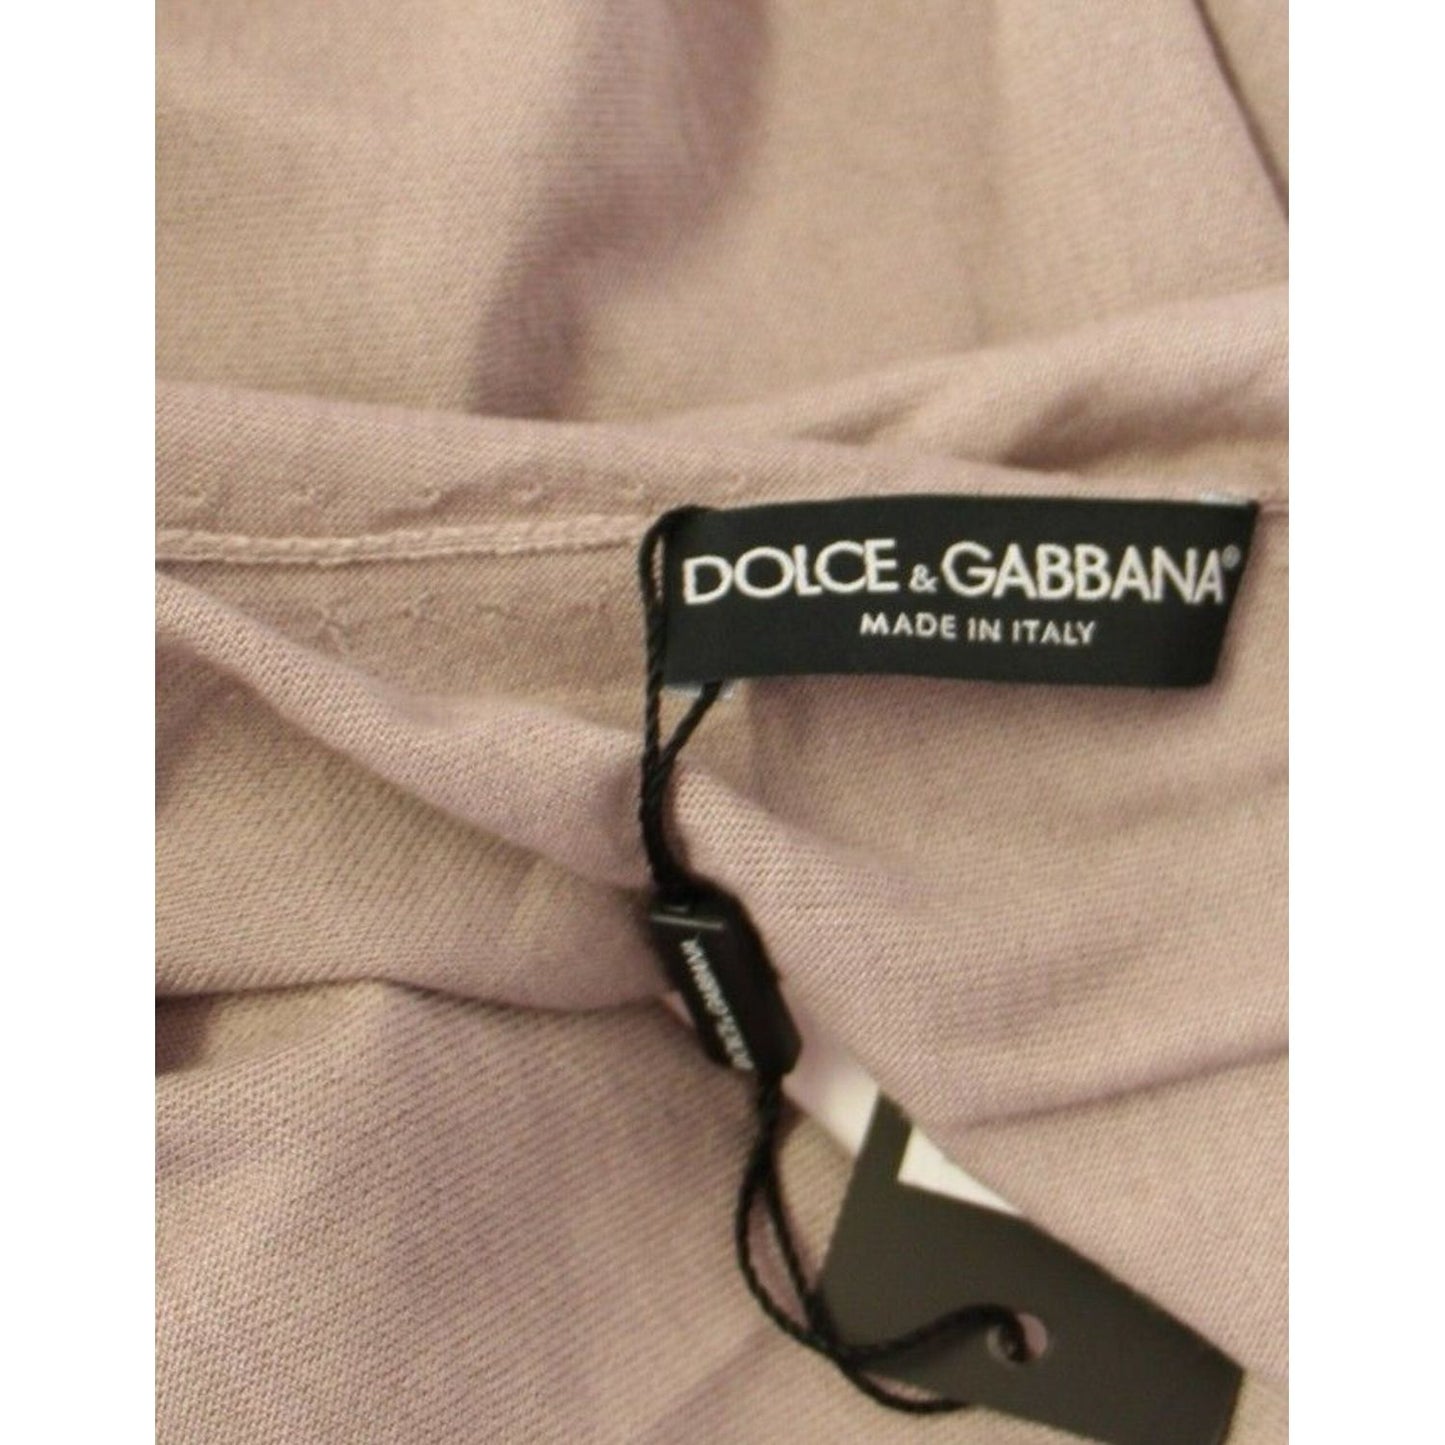 Dolce & Gabbana Elegant Cashmere-Silk Blend Light Knit Shrug shrug-bolero-silk-cashmer-knit-sweater